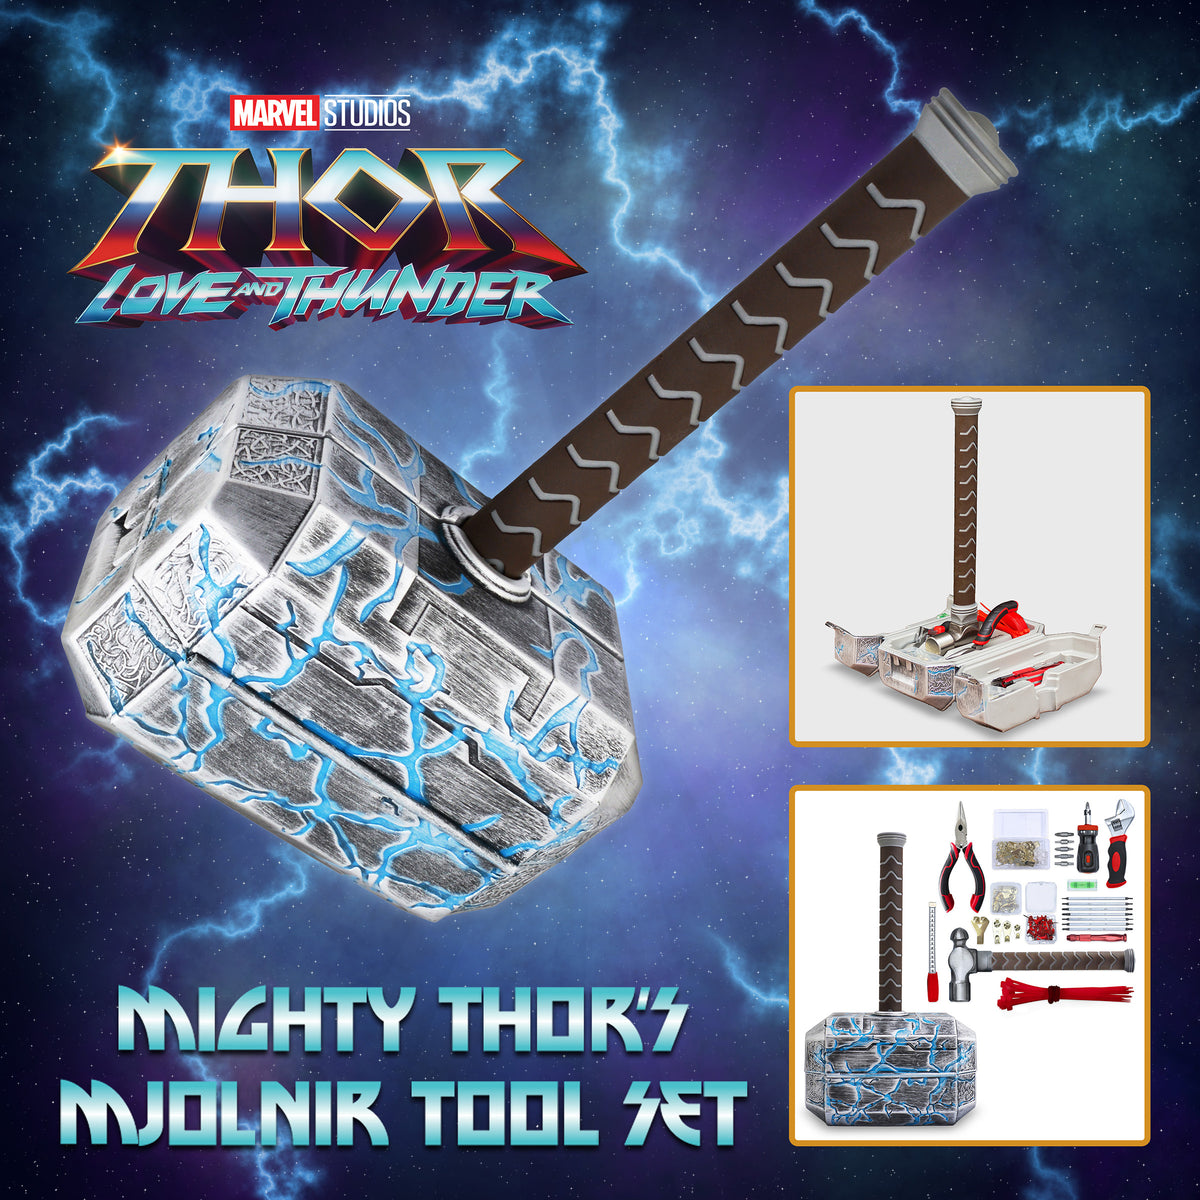 Marvel's Mighty Thor Mjolnir Meat Tenderizer – Ukonic